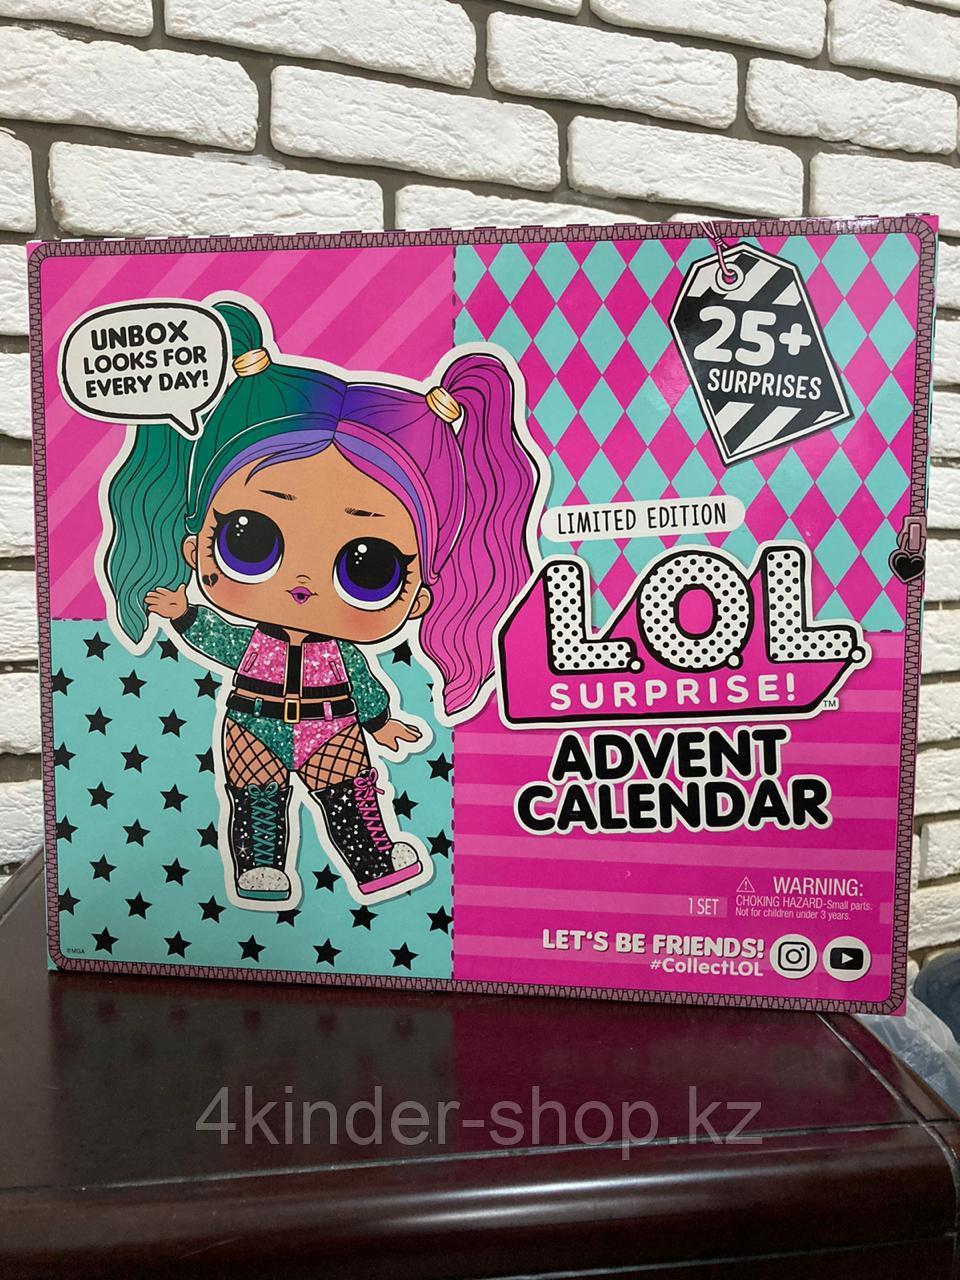 Кукла Лол в Адвент календаре Lol surprise Advent Calendar